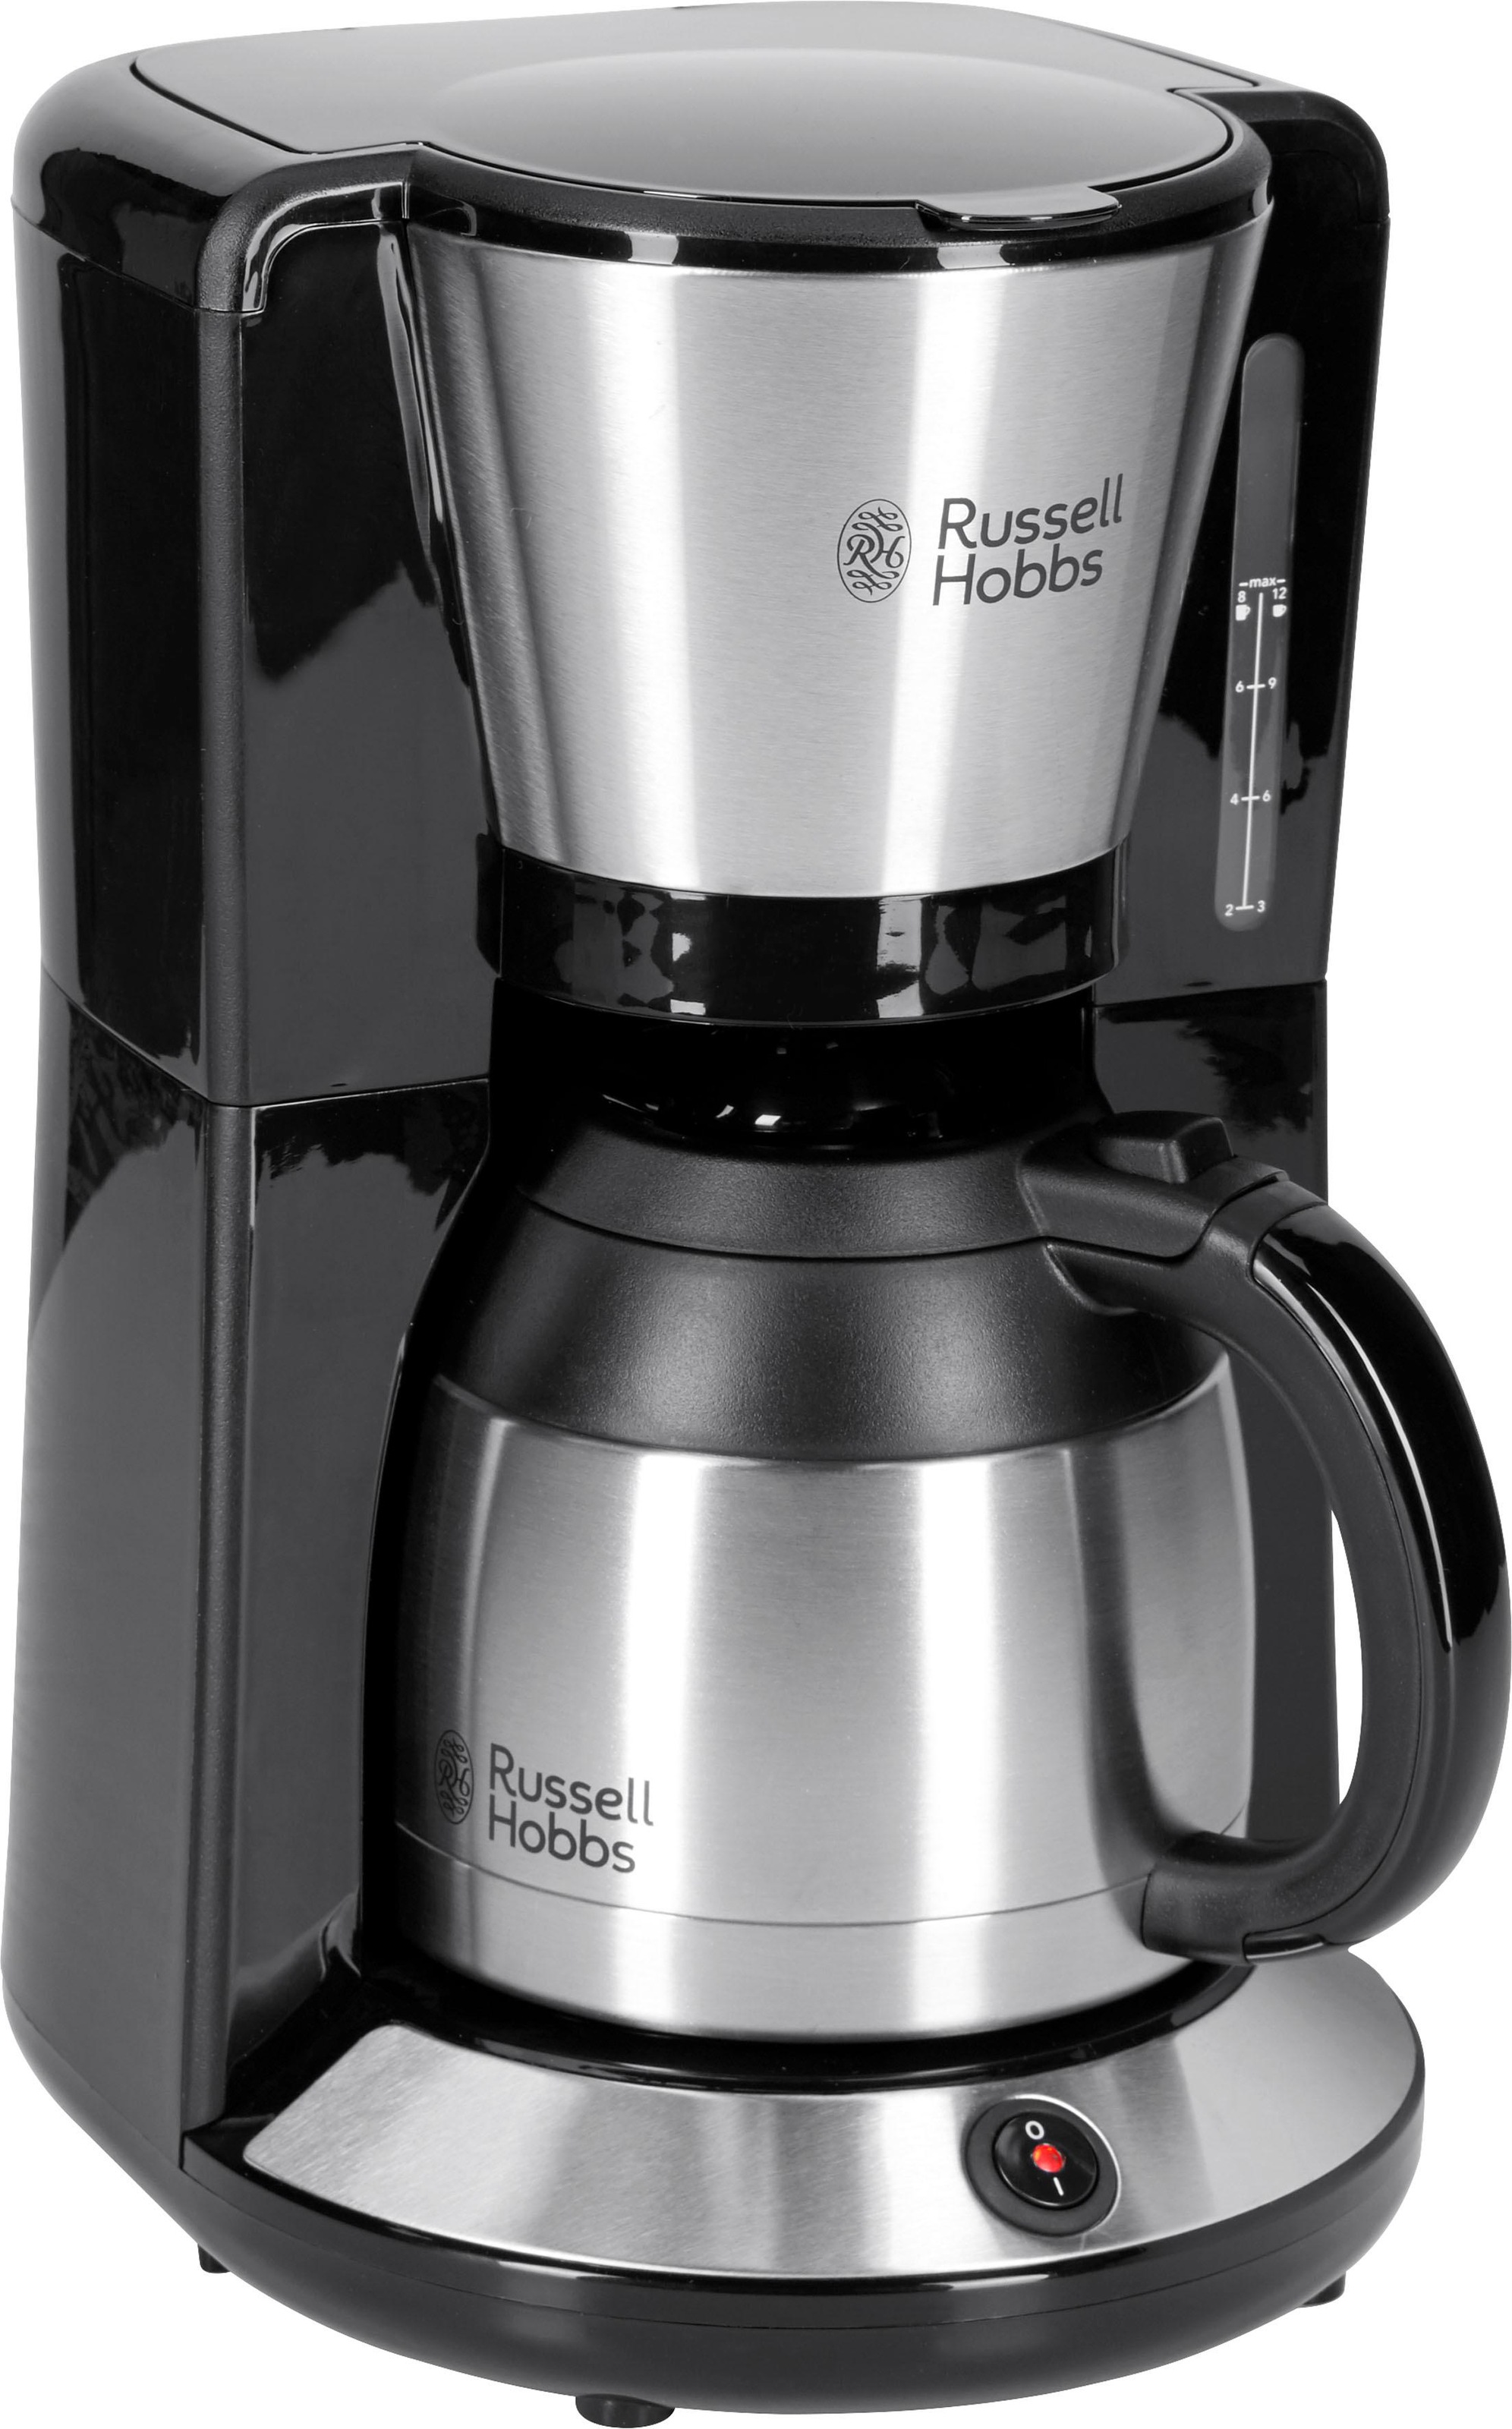 RUSSELL HOBBS Filterkaffeemaschine "Adventure 24020-56", 1 l Kaffeekanne, Papierfilter, 1x4, mit Thermokanne, 1100 Watt,